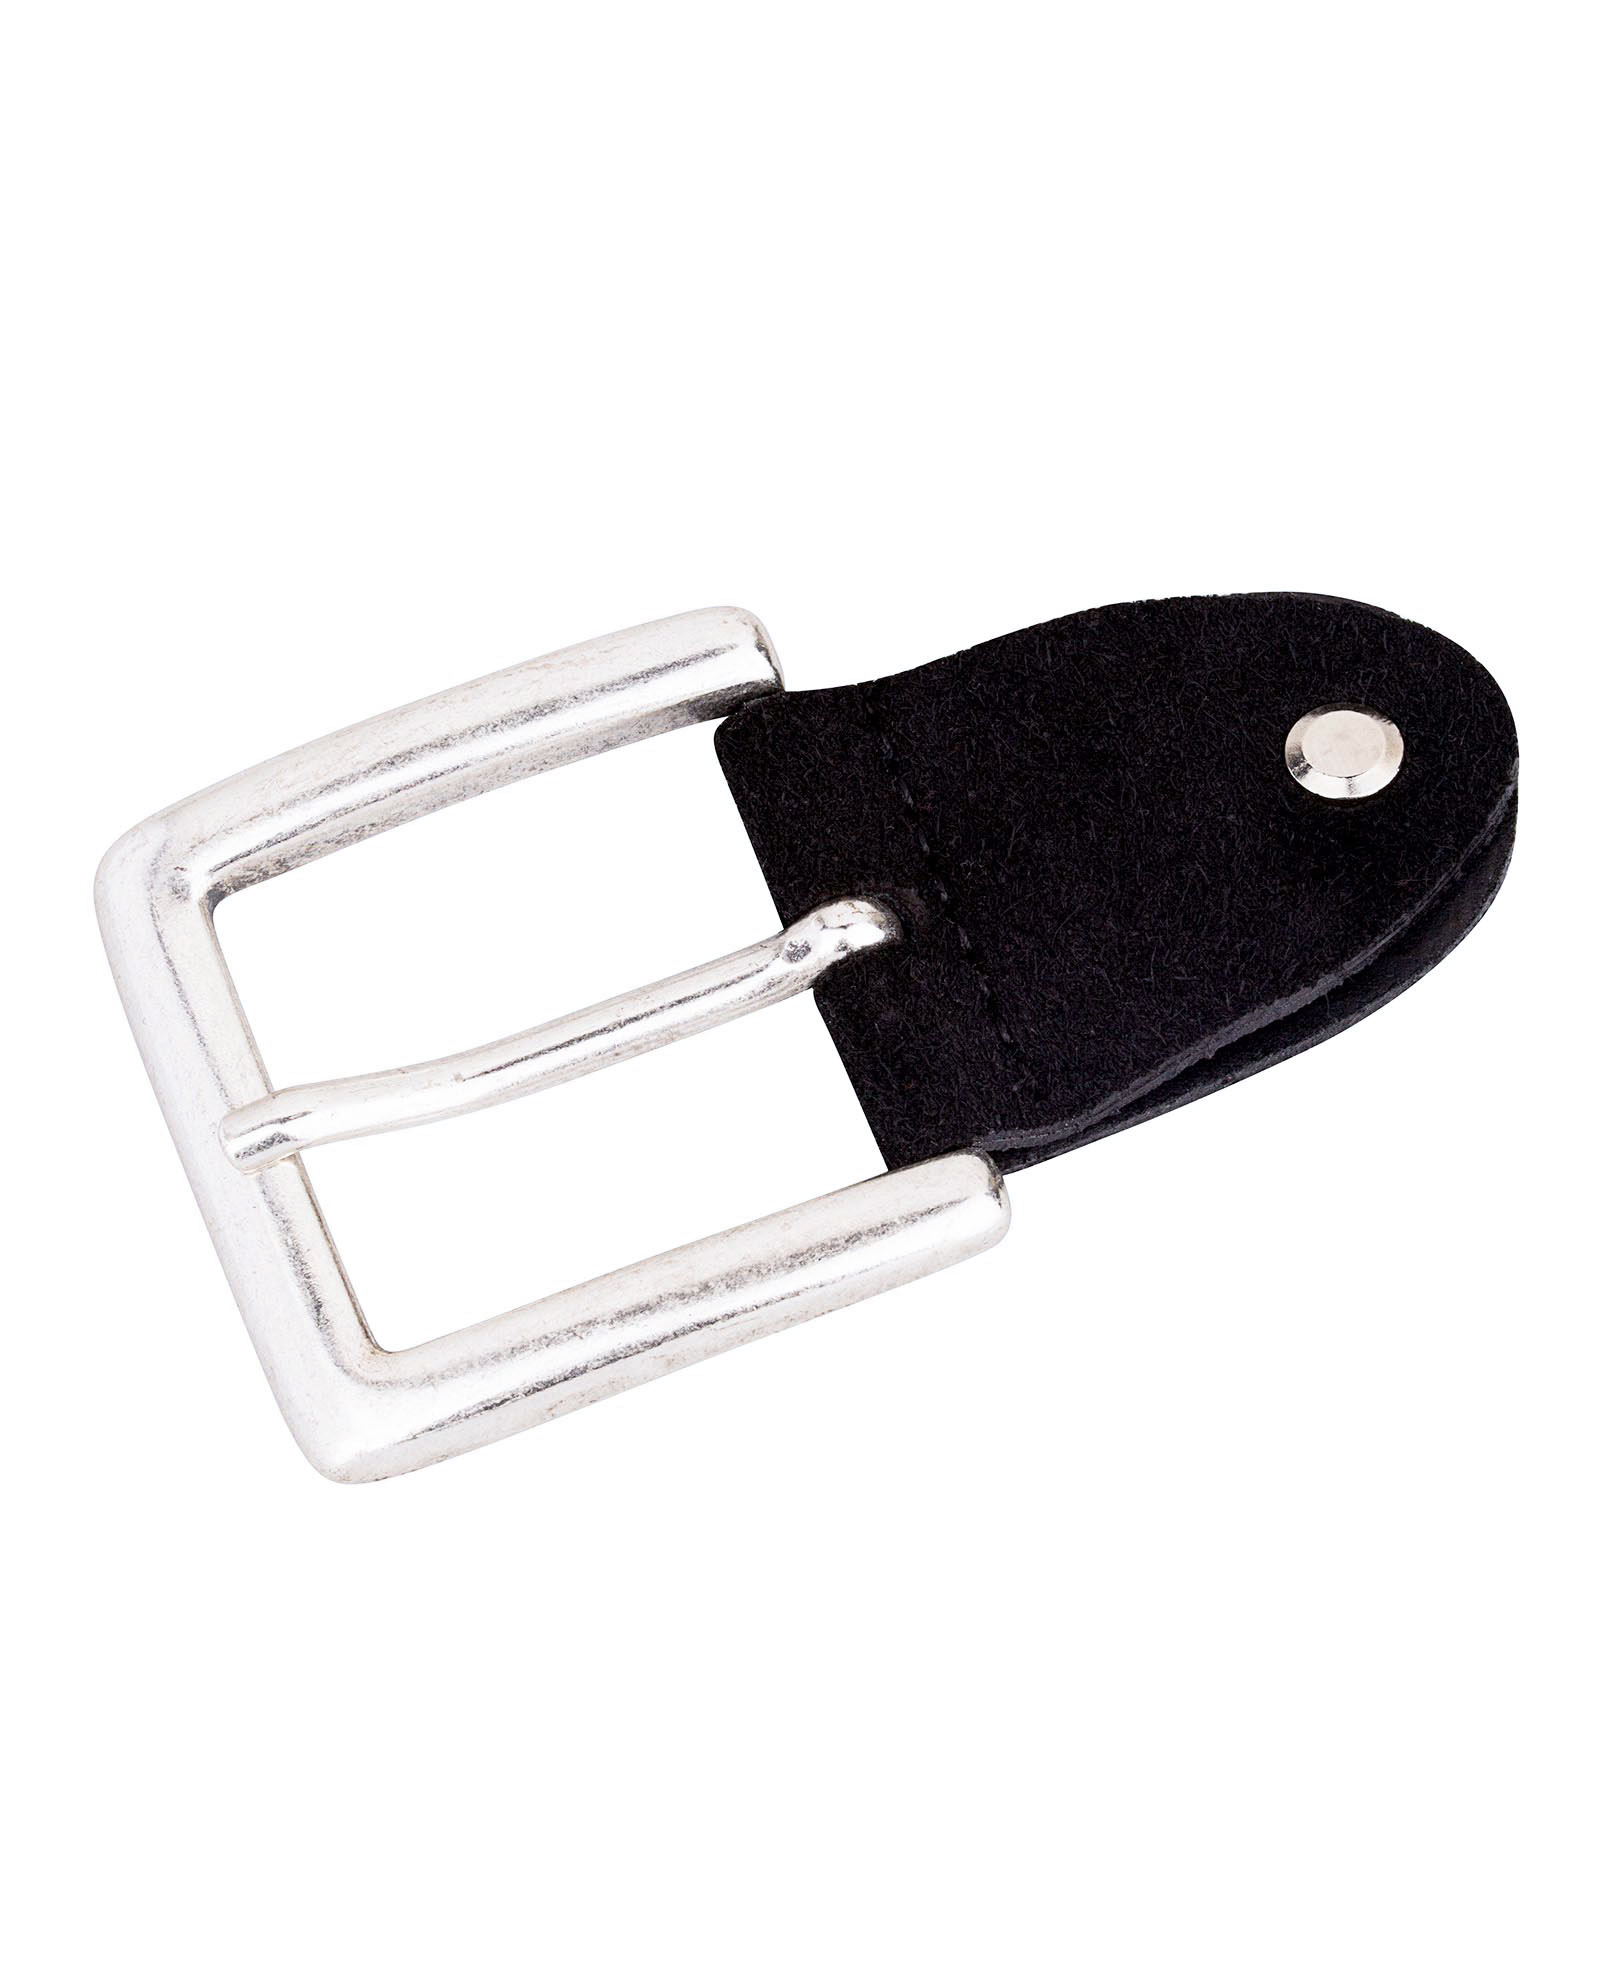 Buy Pin Belt Buckle - Blue suede 40 mm Hardware - LeatherBeltsOnline.com